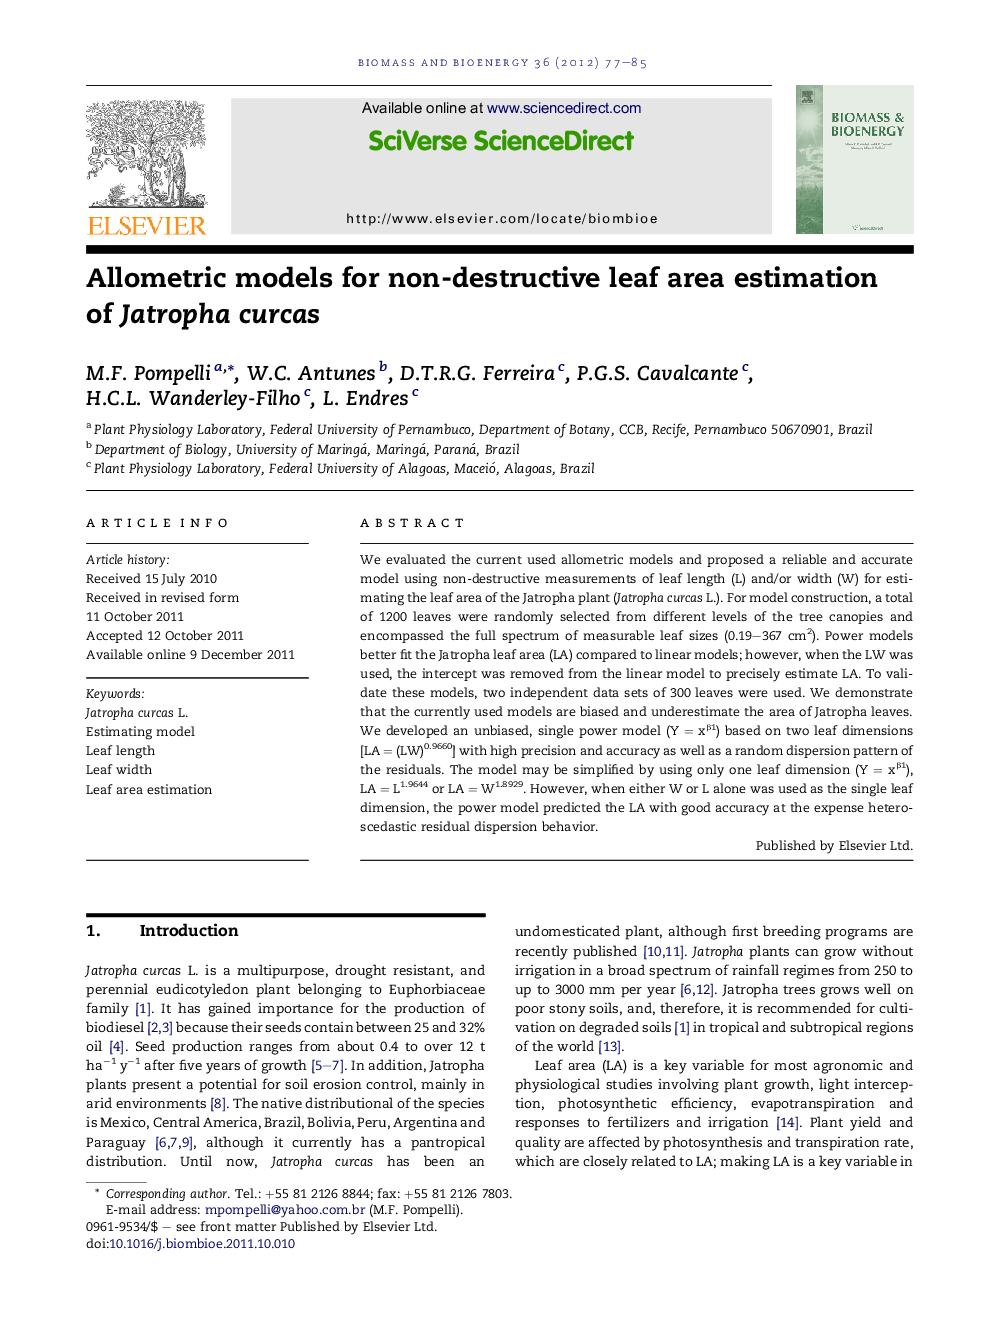 Allometric models for non-destructive leaf area estimation of Jatropha curcas